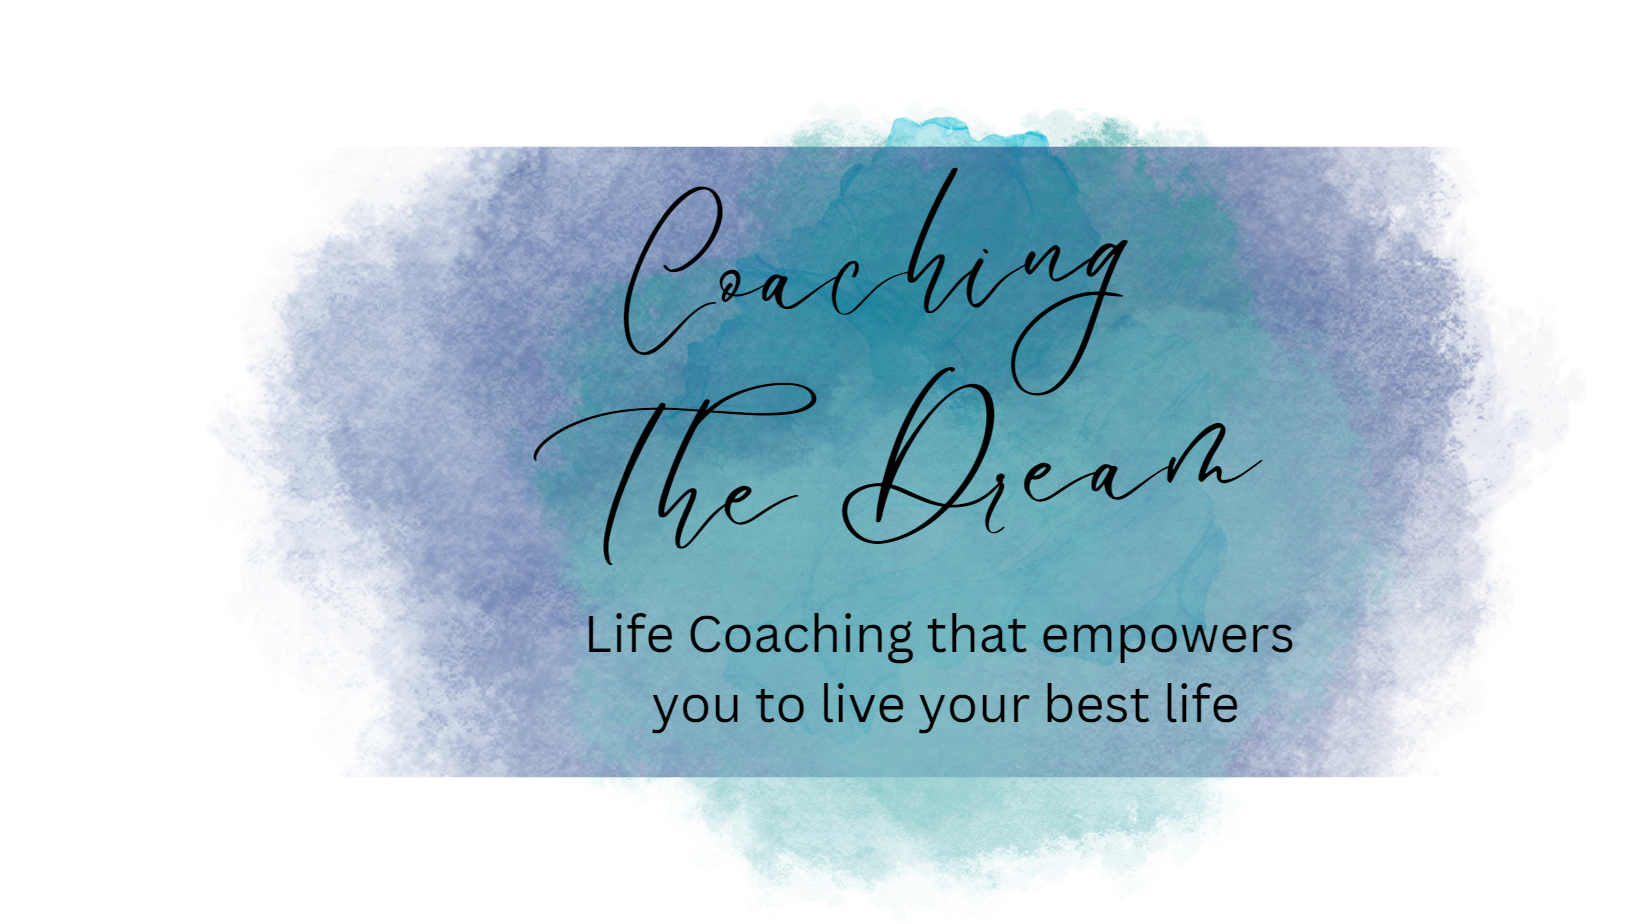 Life Coaching with Coaching the Dream